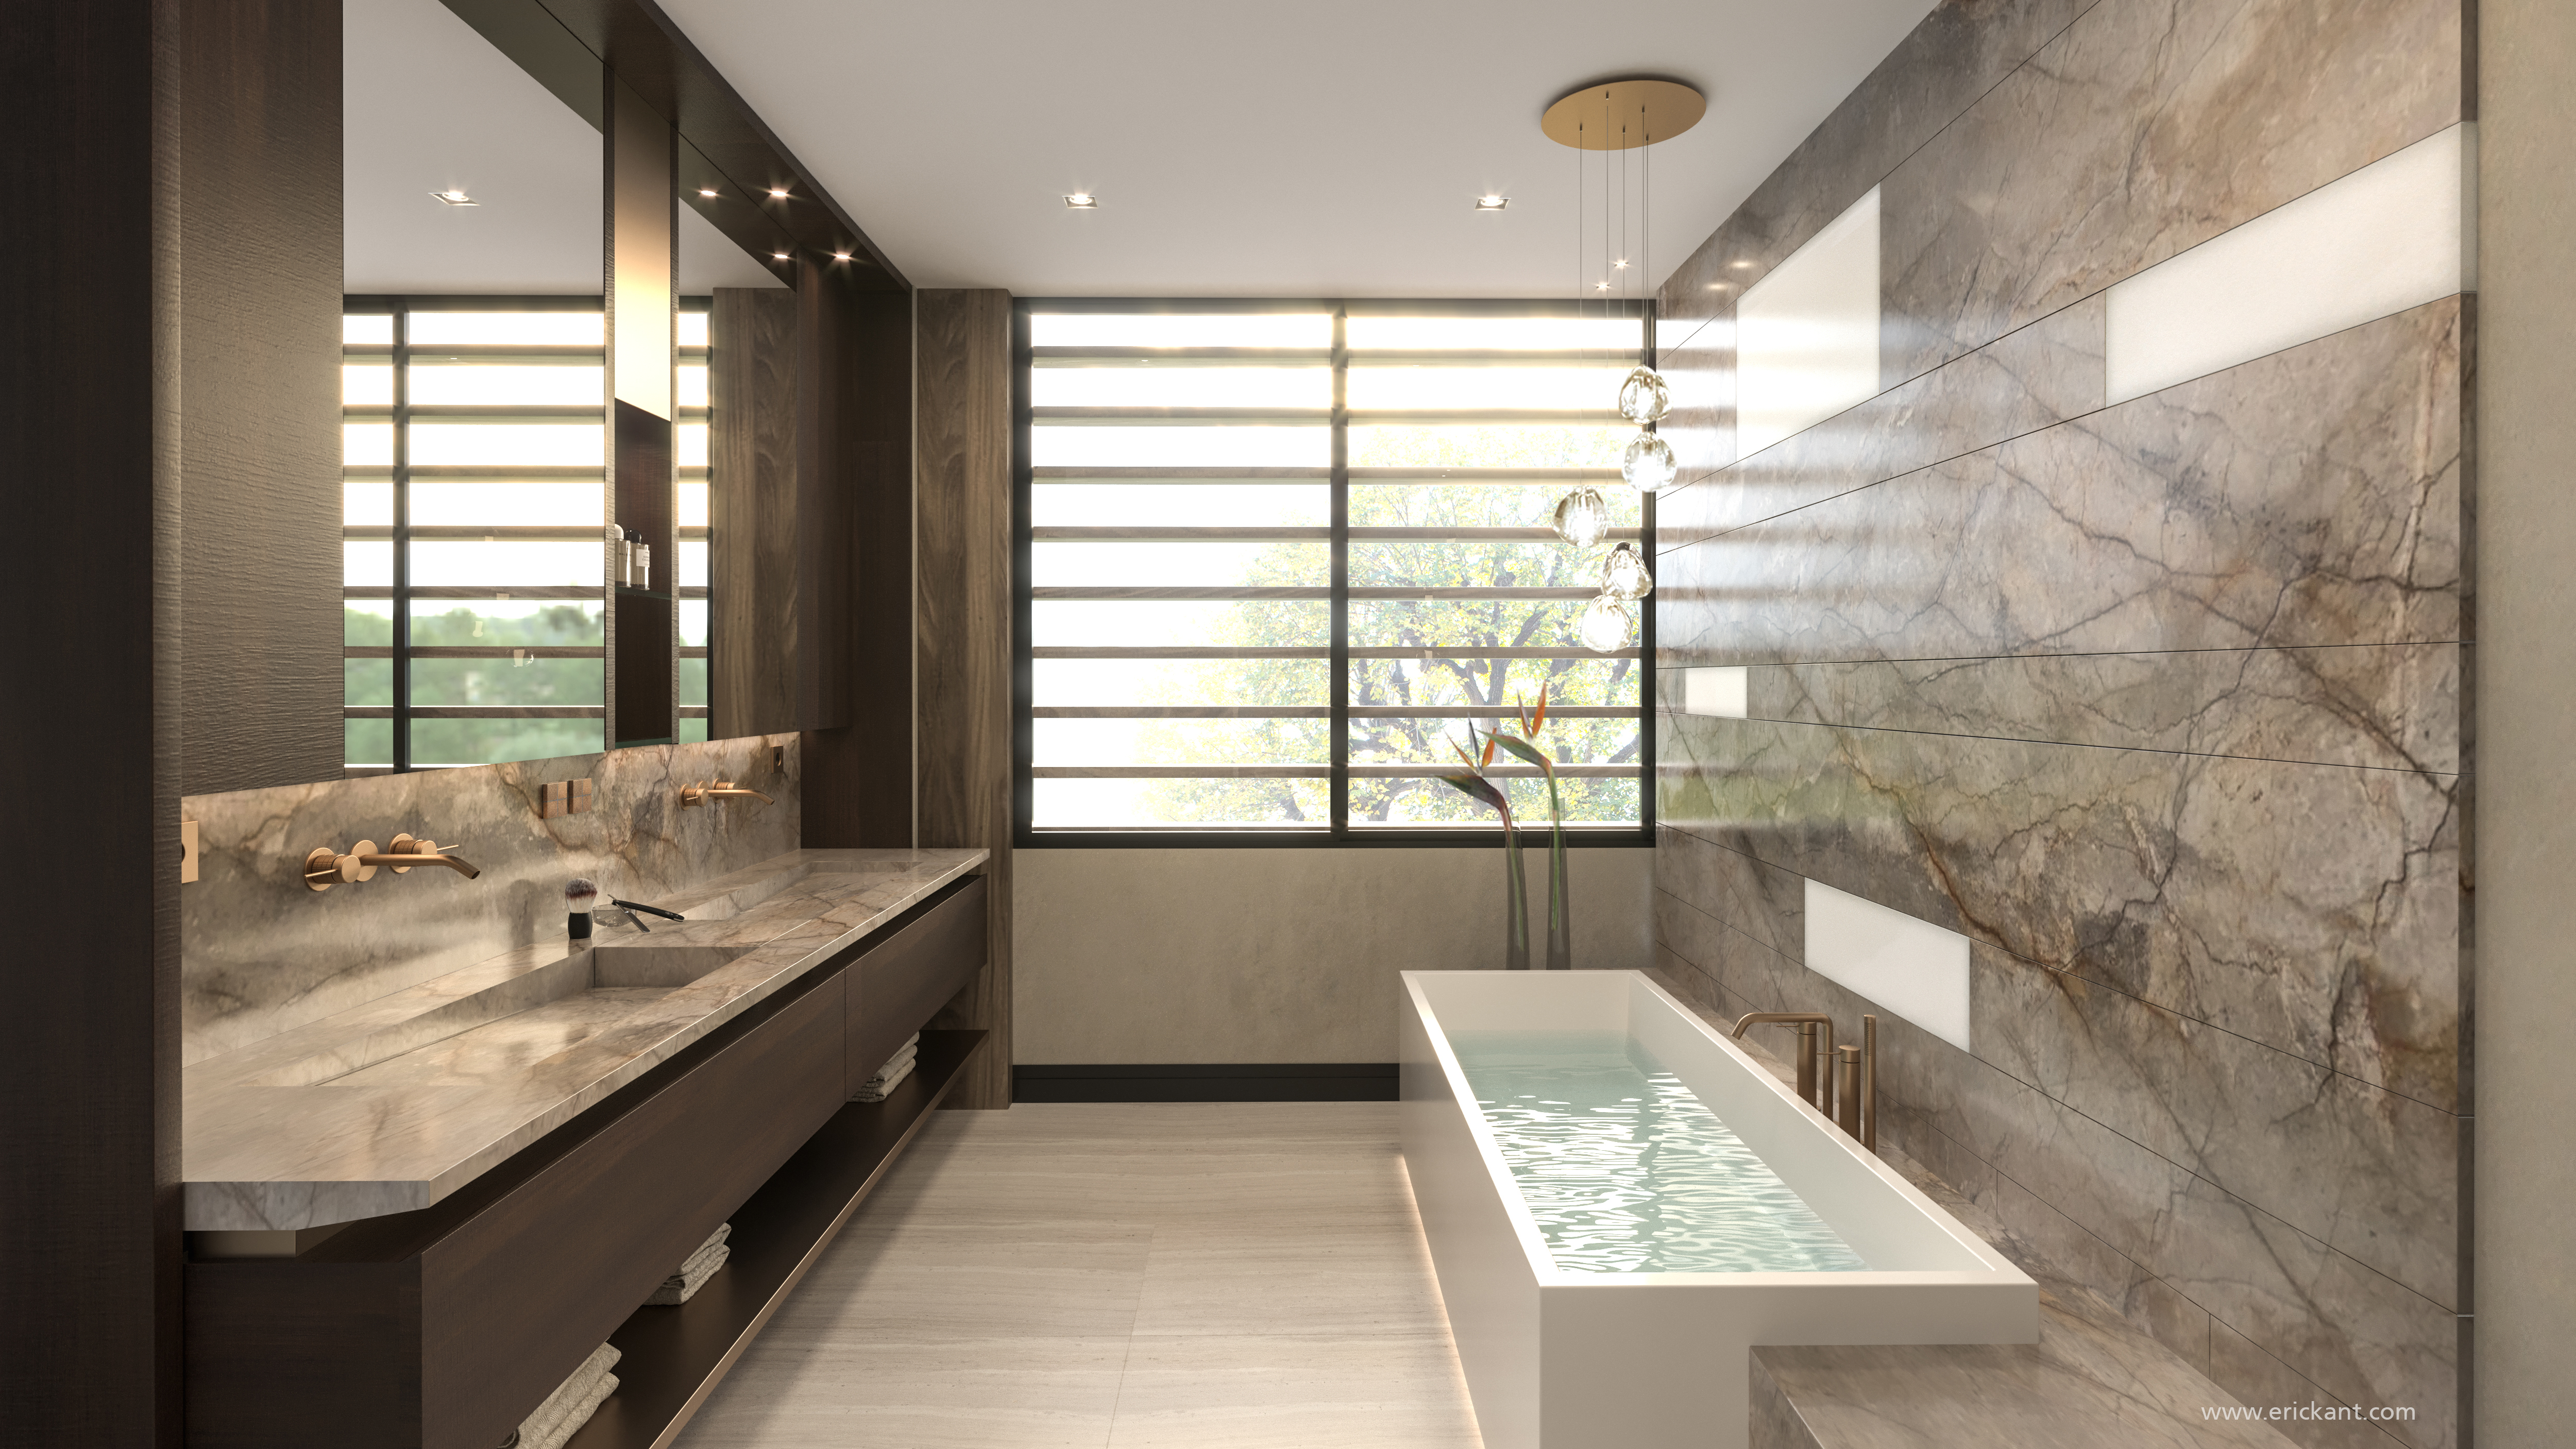 Luxury-Bathroom-Design-Eric-Kant-2.jpg